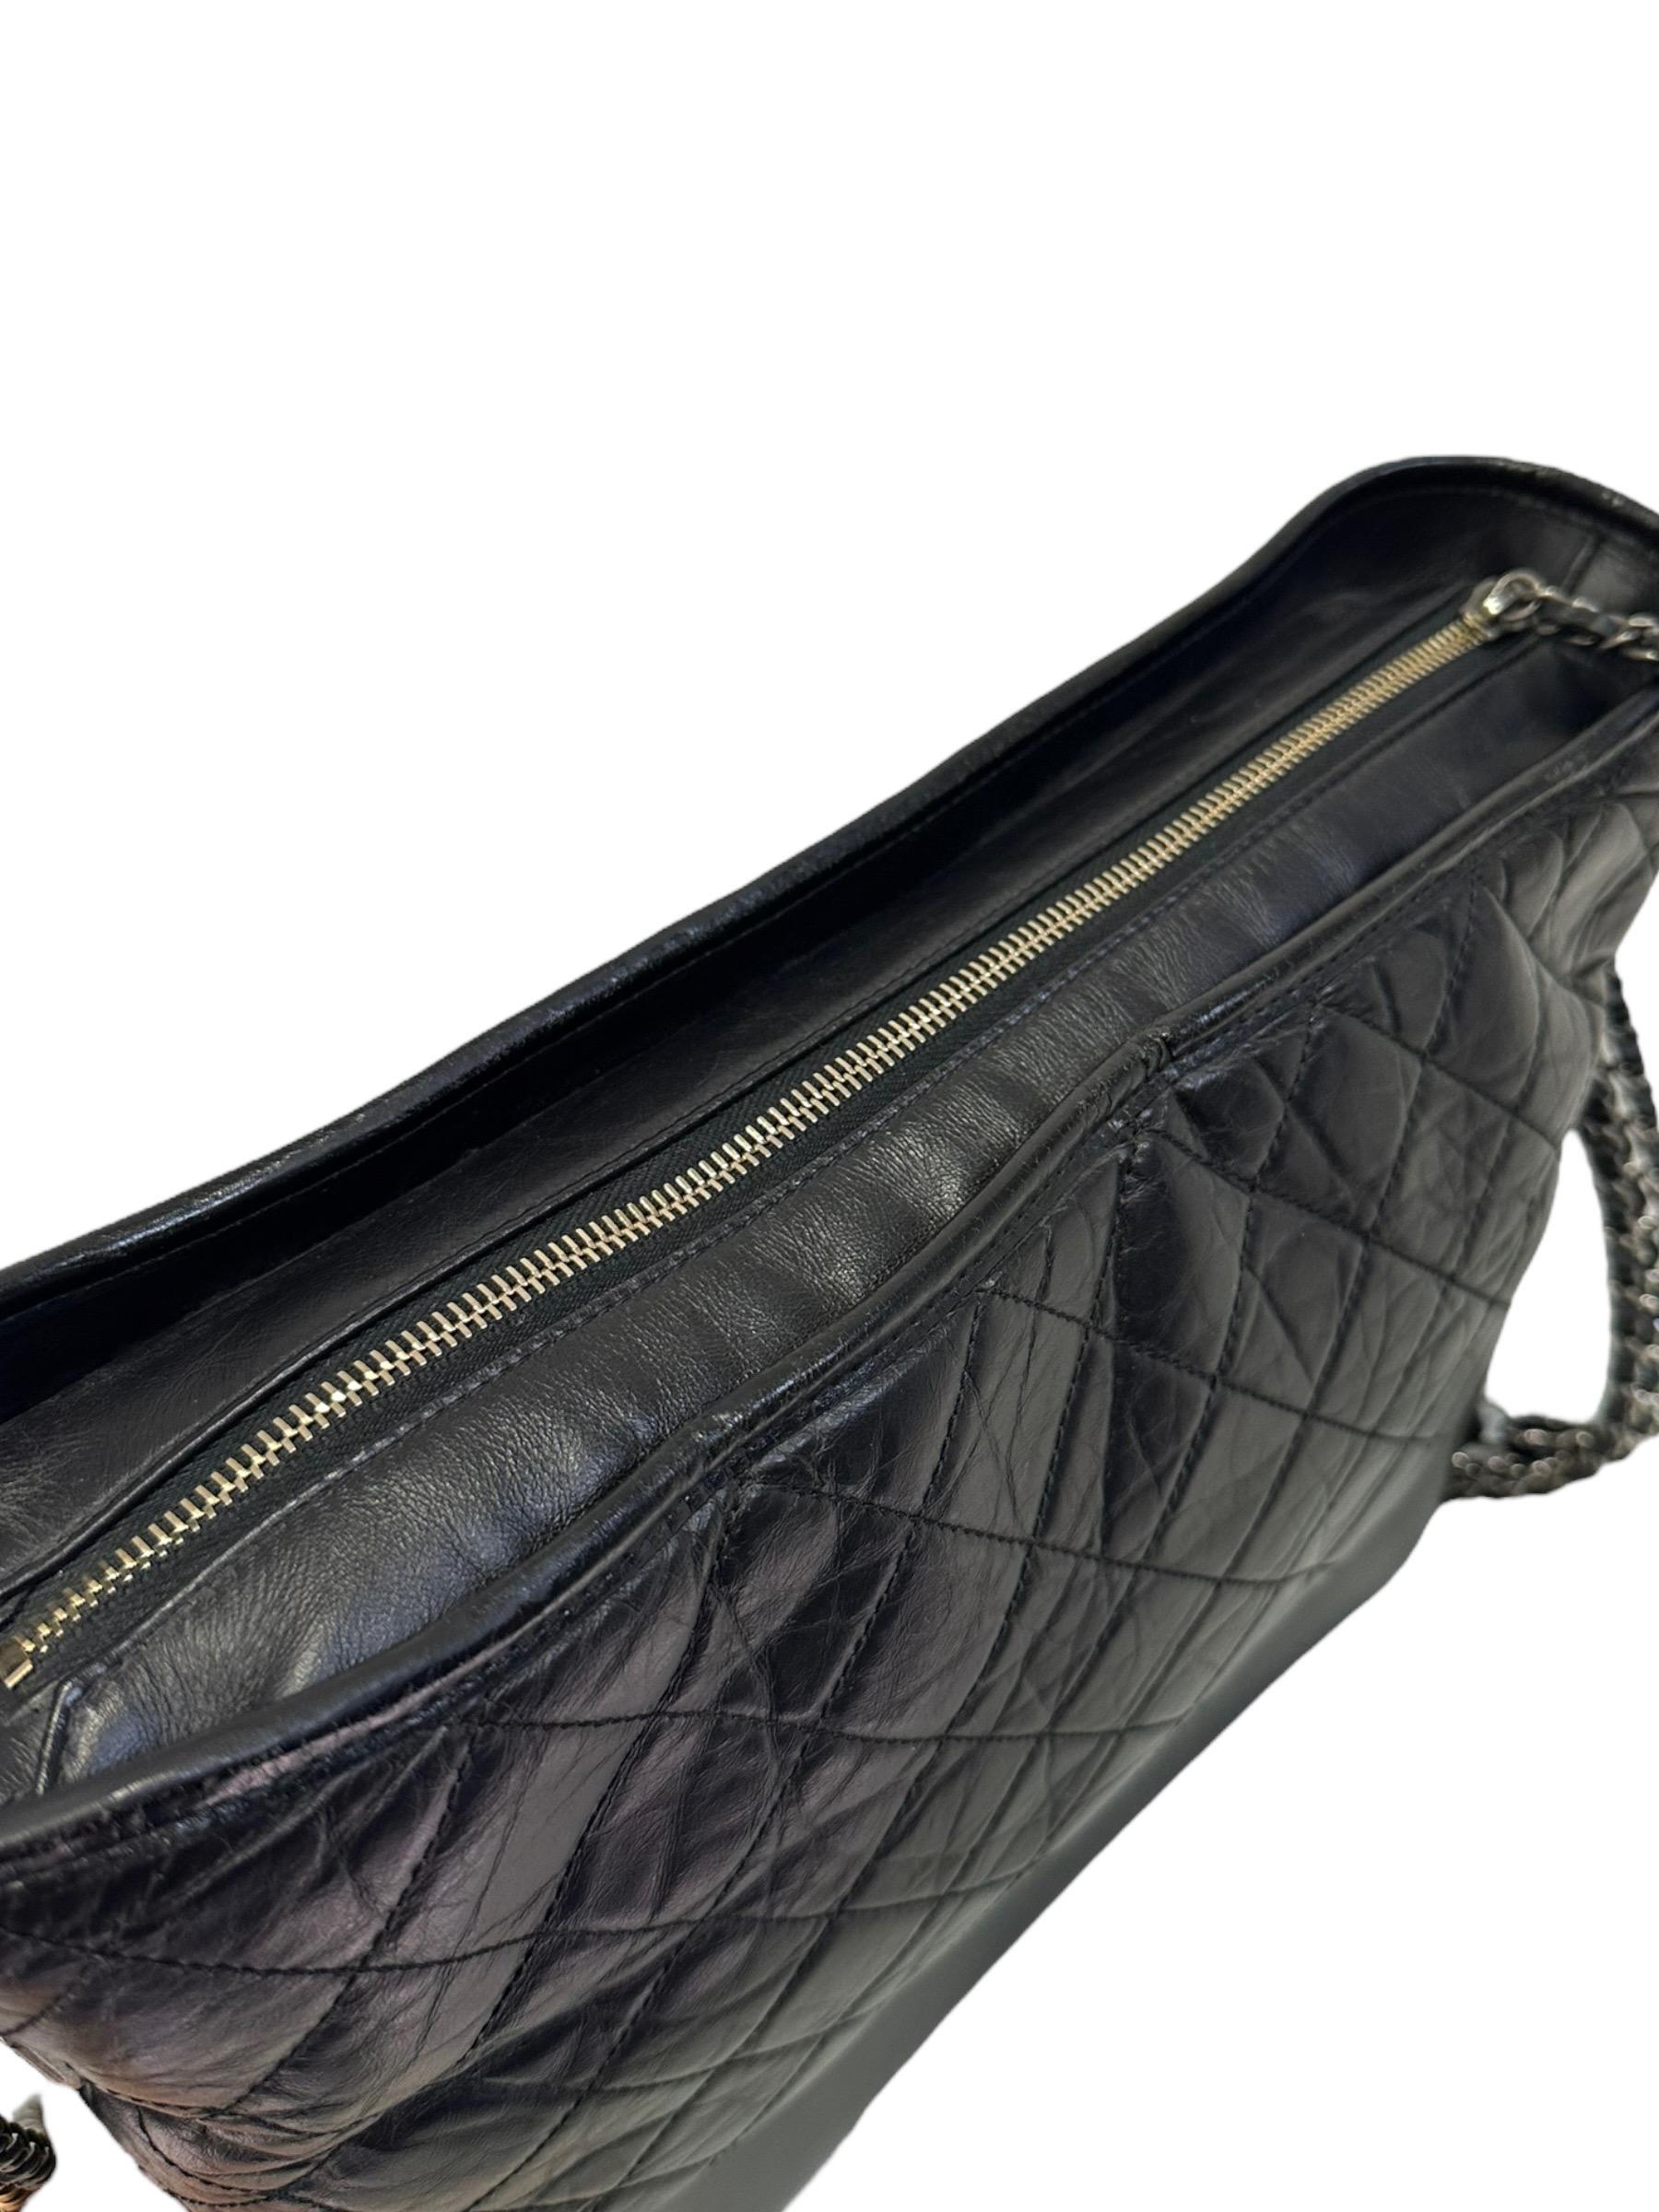 2018 Chanel Gabrielle Maxi Black Leather Top Shoulder Bag For Sale 1